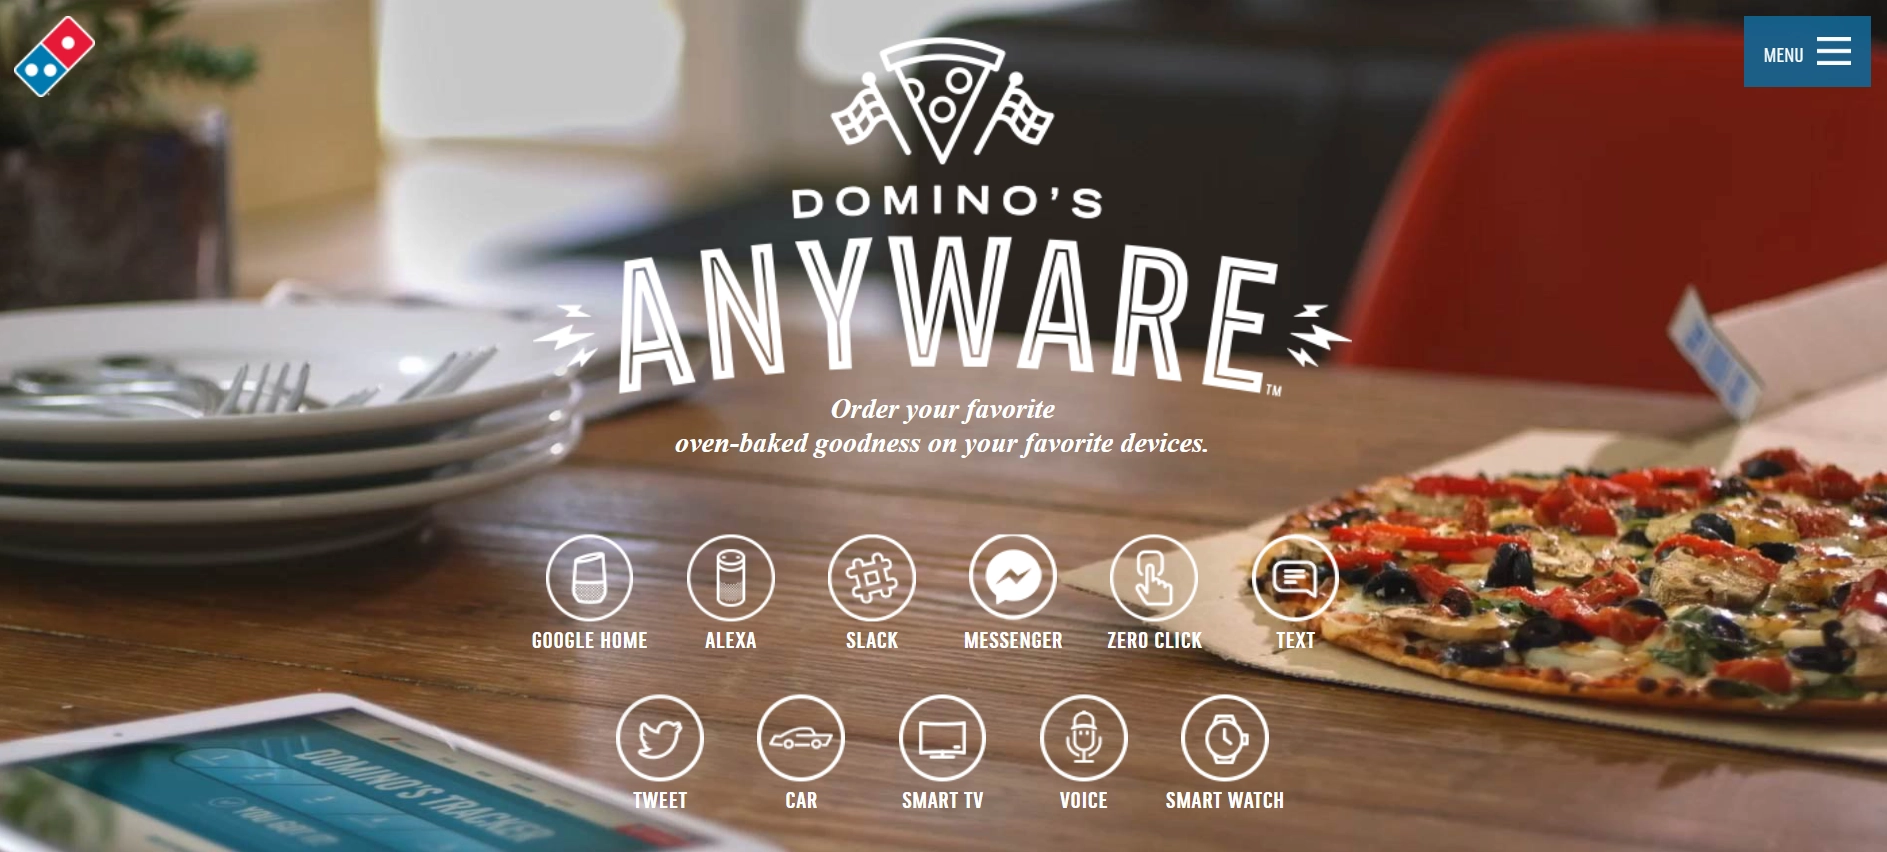 Domino's AnyWare website